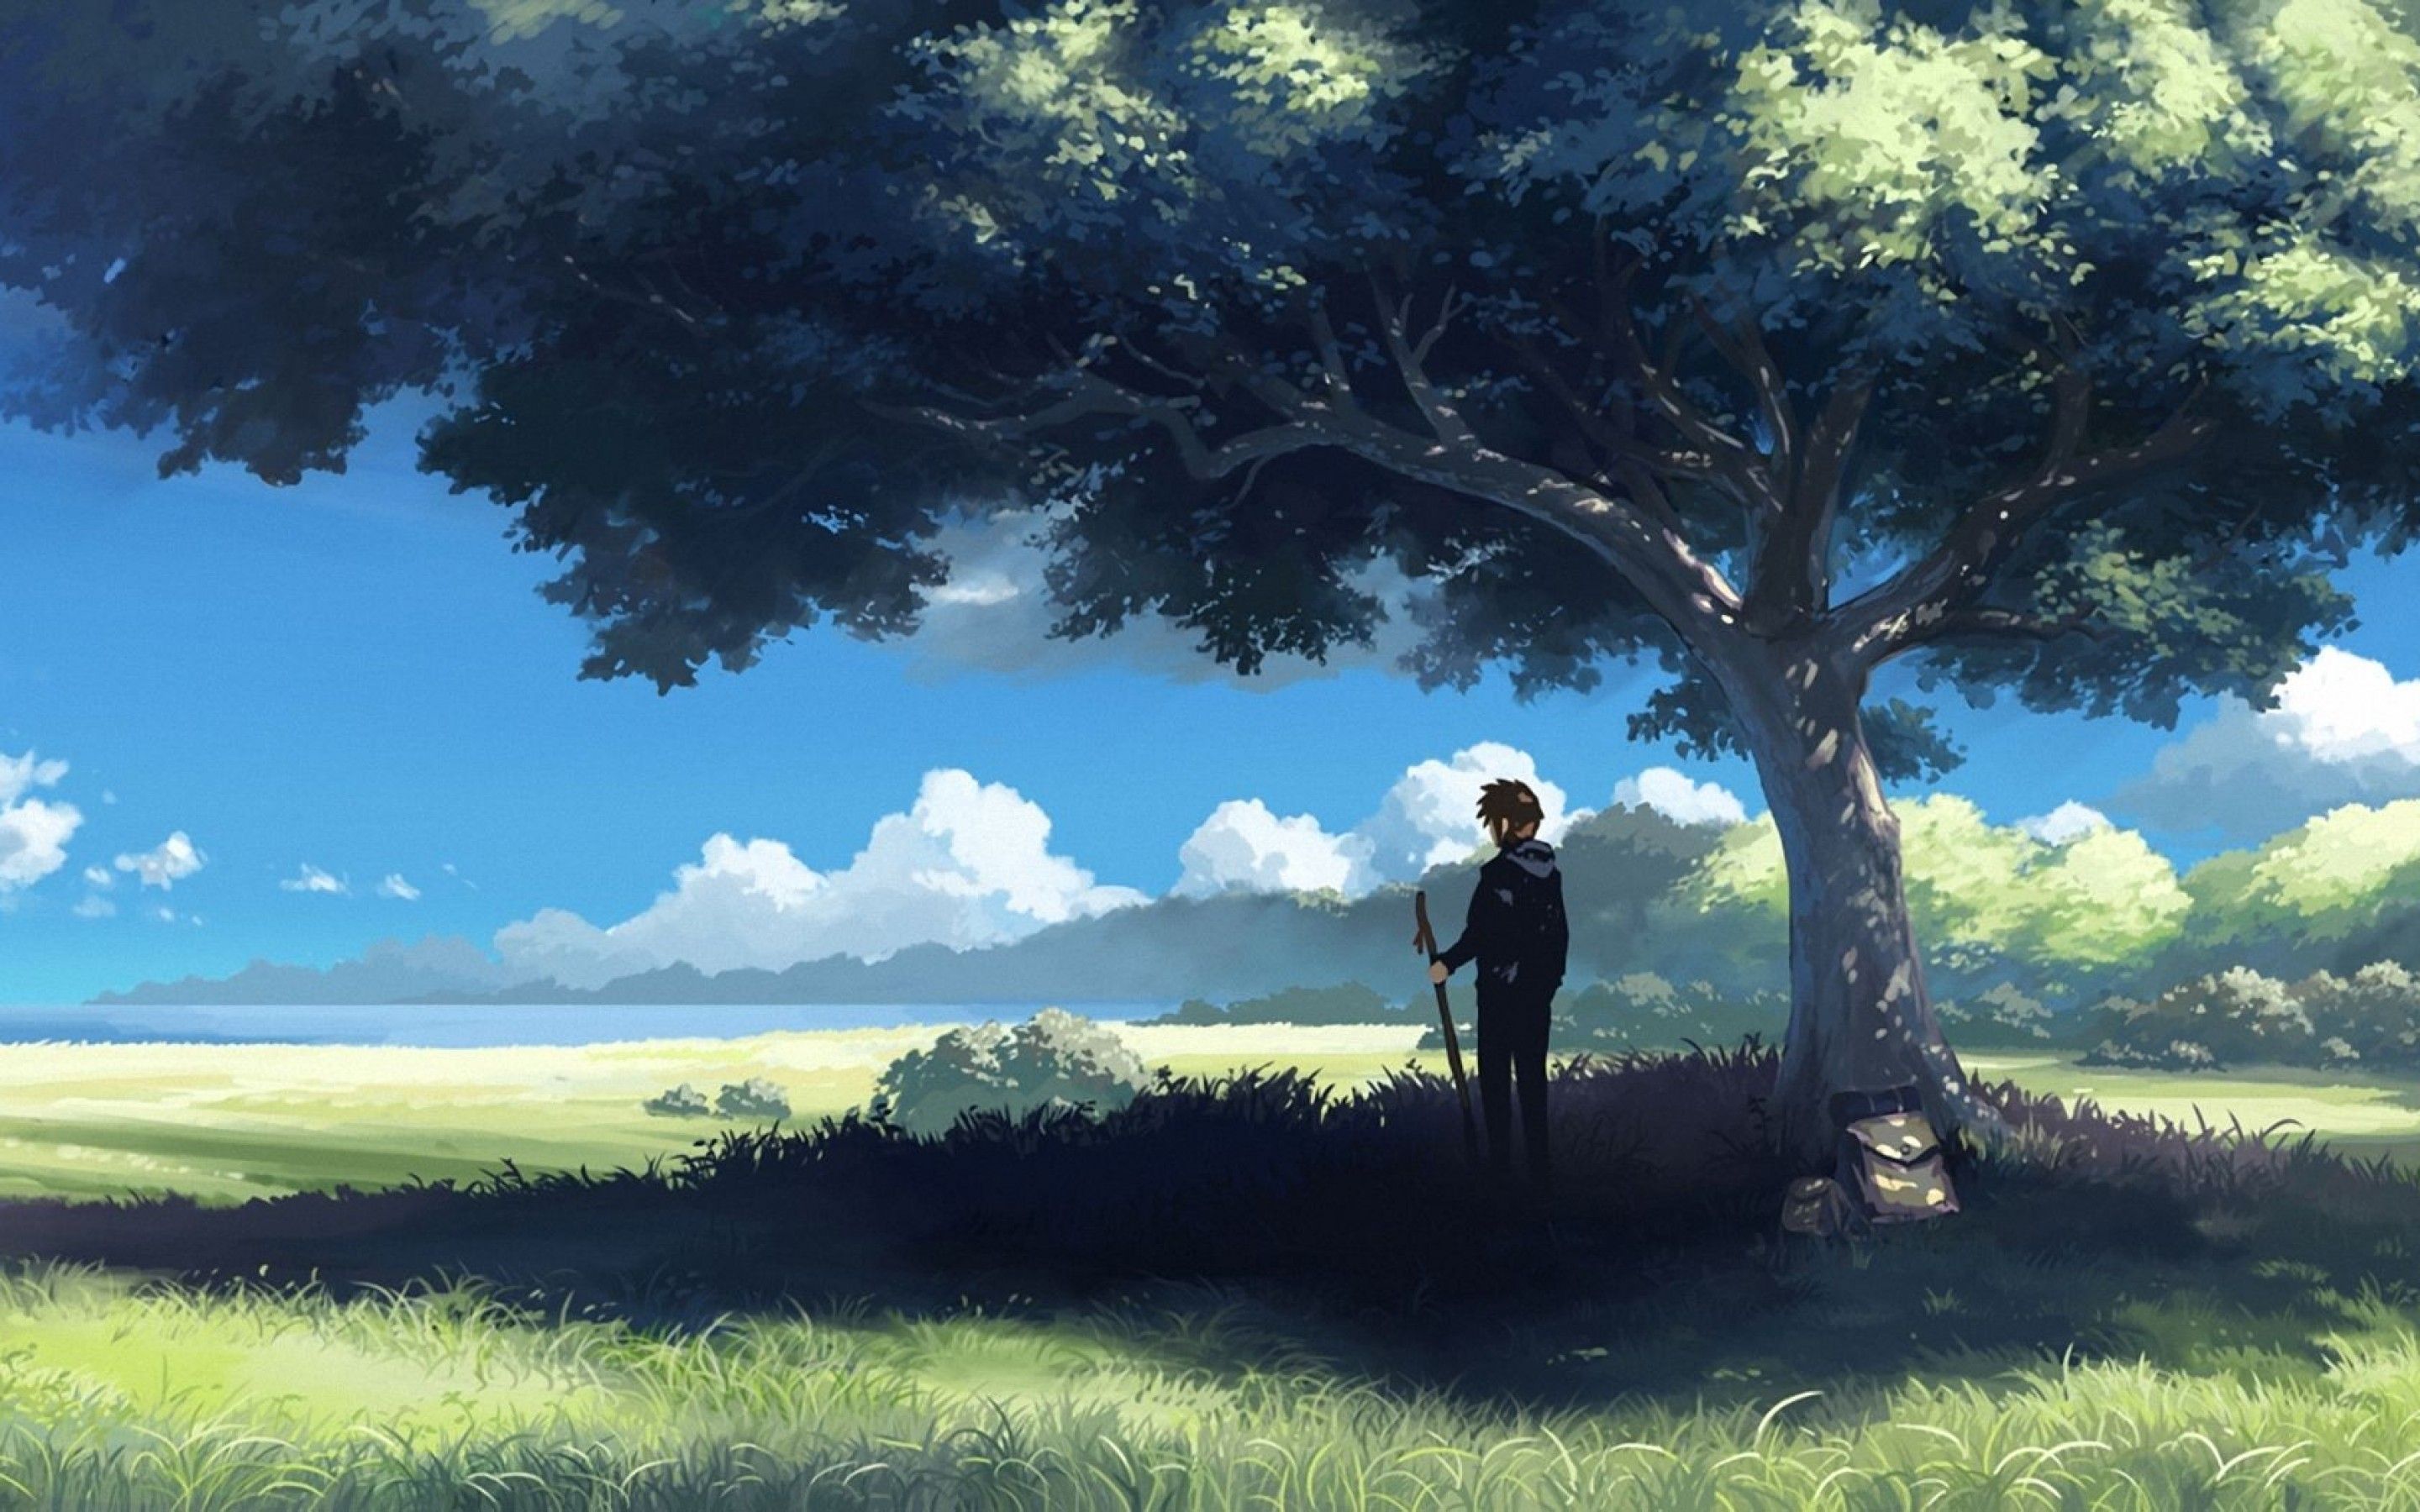 Fondos de pantalla de paisajes anime - FondosMil